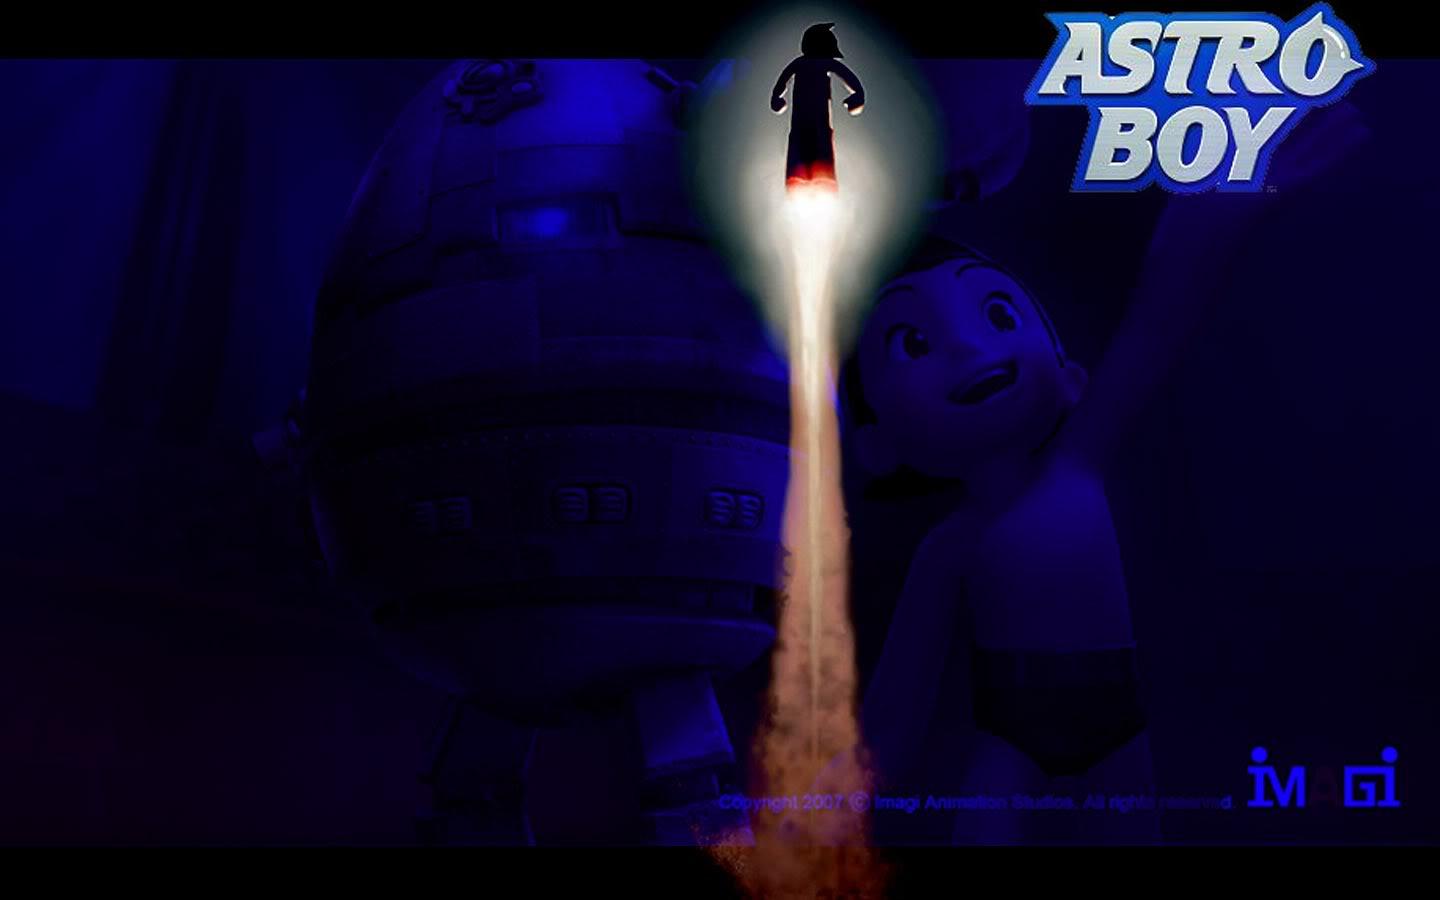 Astro Boy Wallpaper Image for Nexus 6